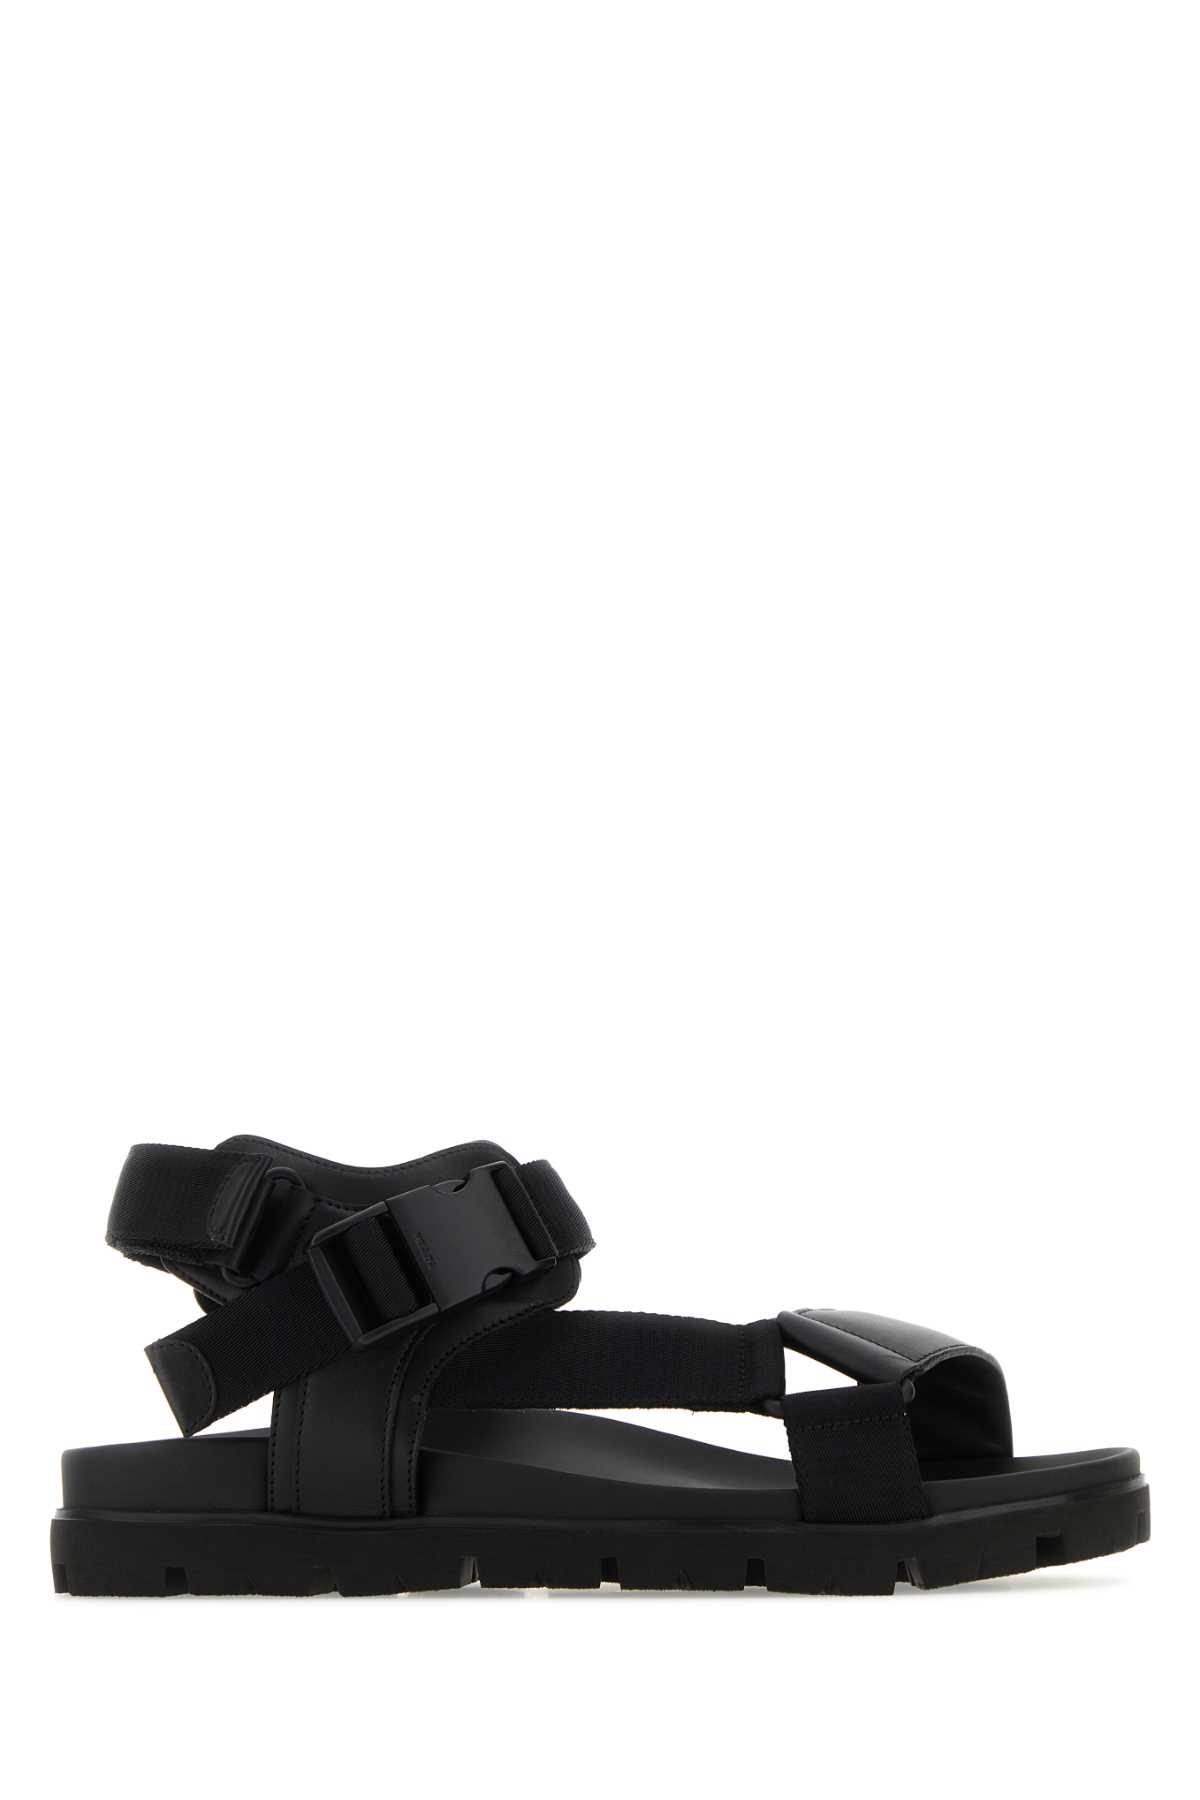 Prada Black Nylon And Leather Sandals